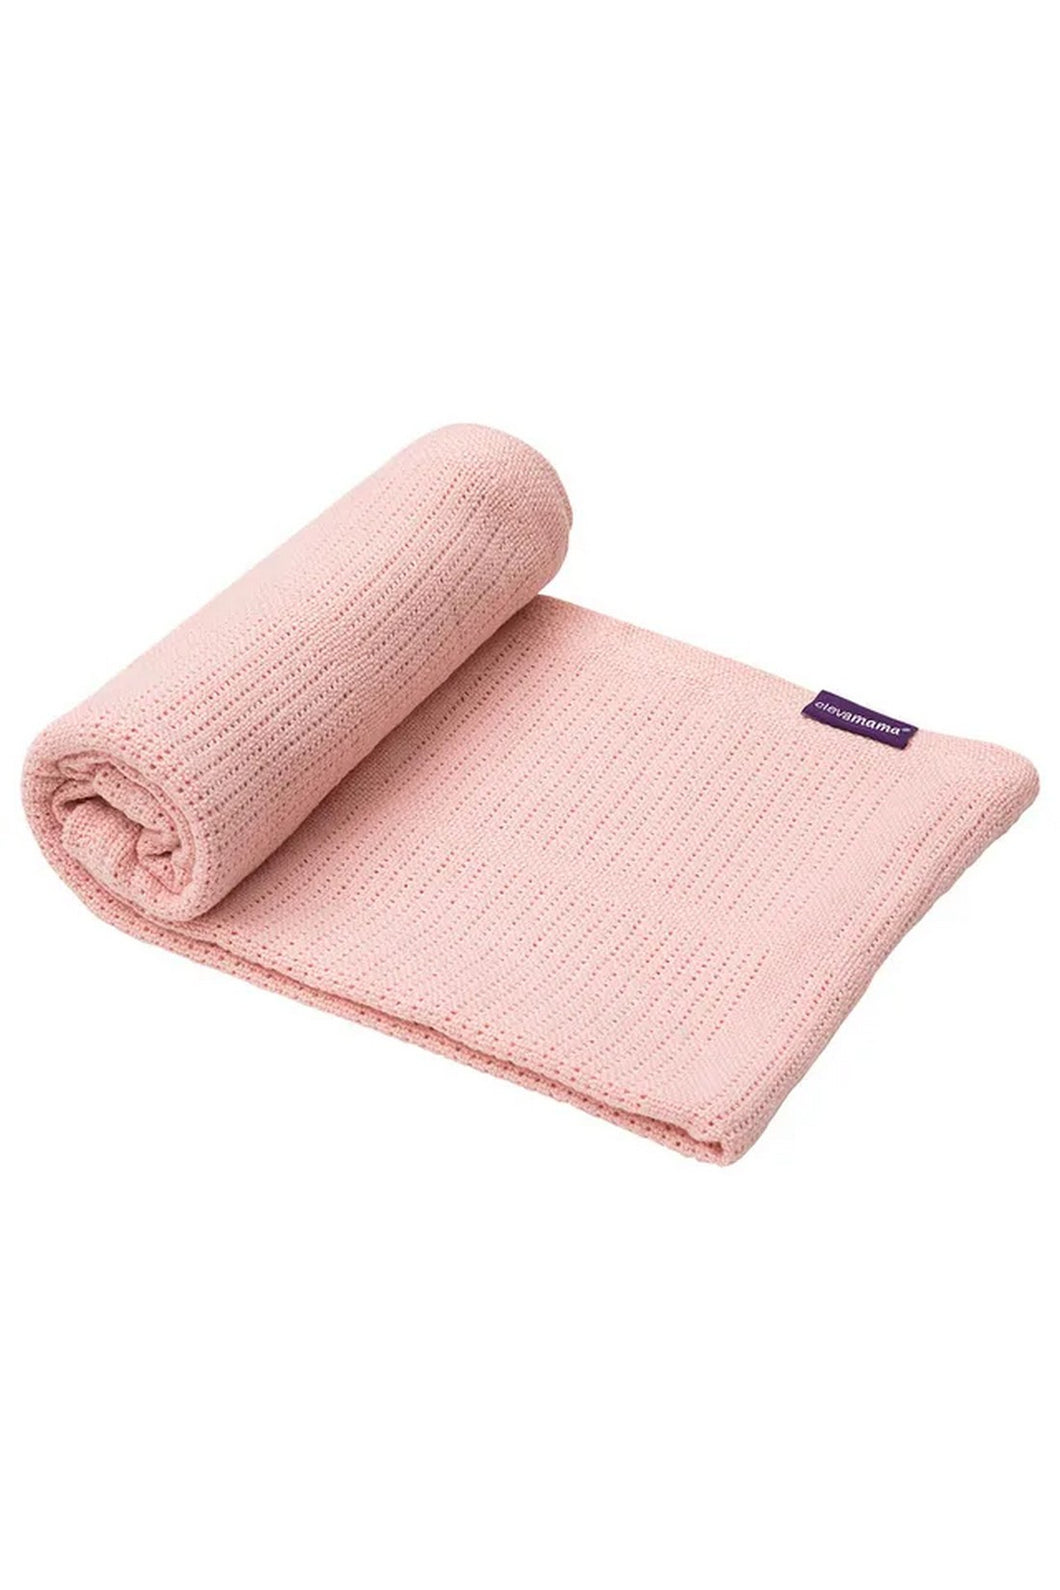 Clevamam Cellular Baby Blanket Crib, Moses Basket 80 x 100cm - Pink